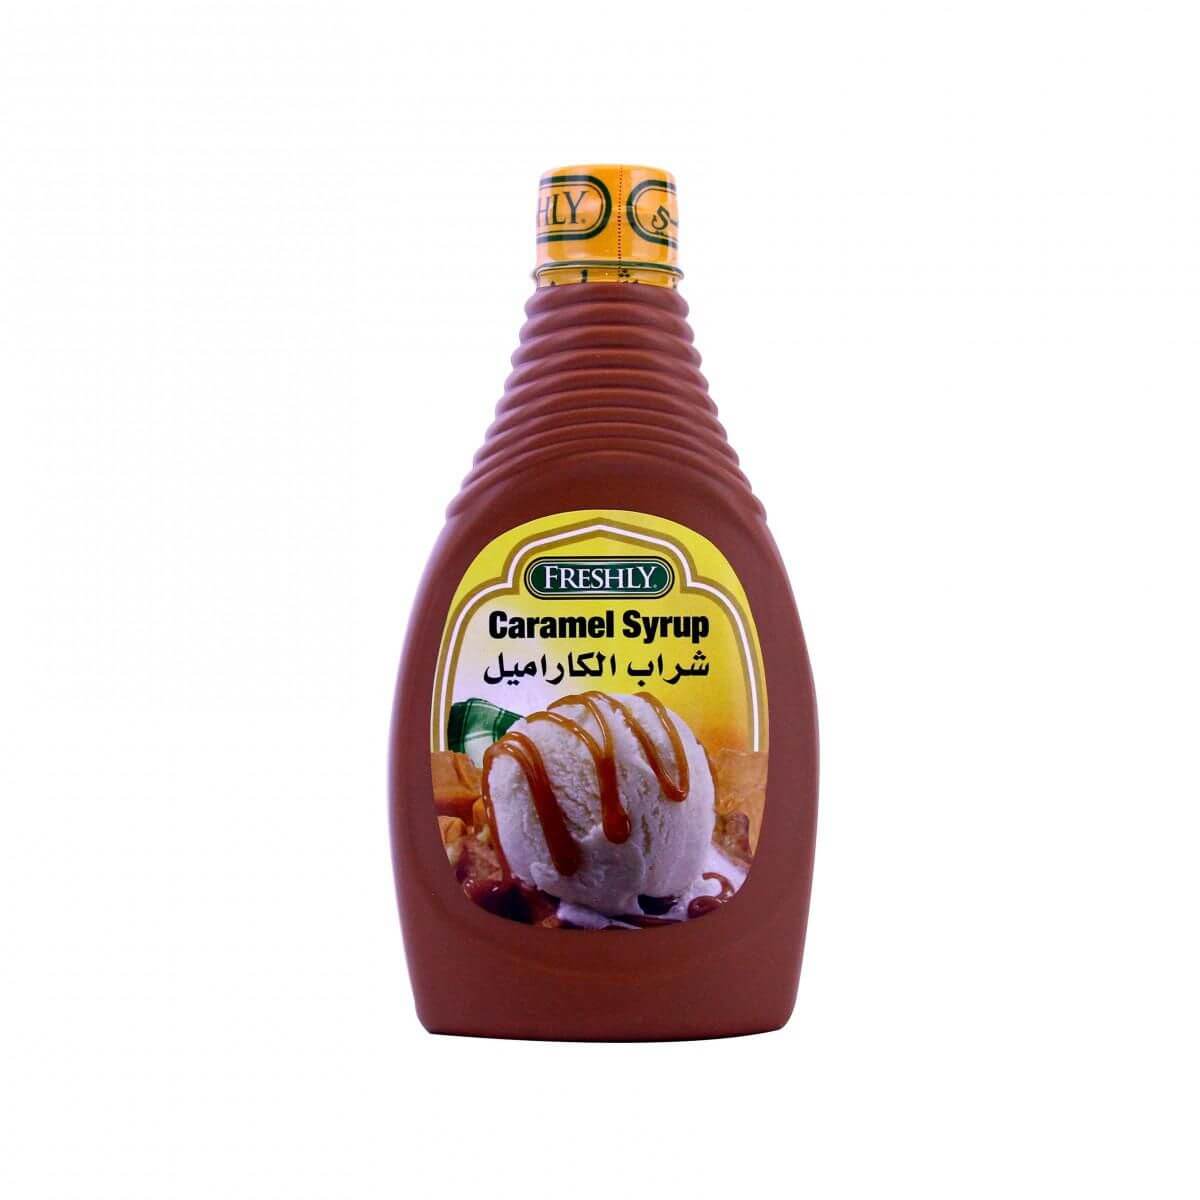 Freshly Caramel Syrup 624 g